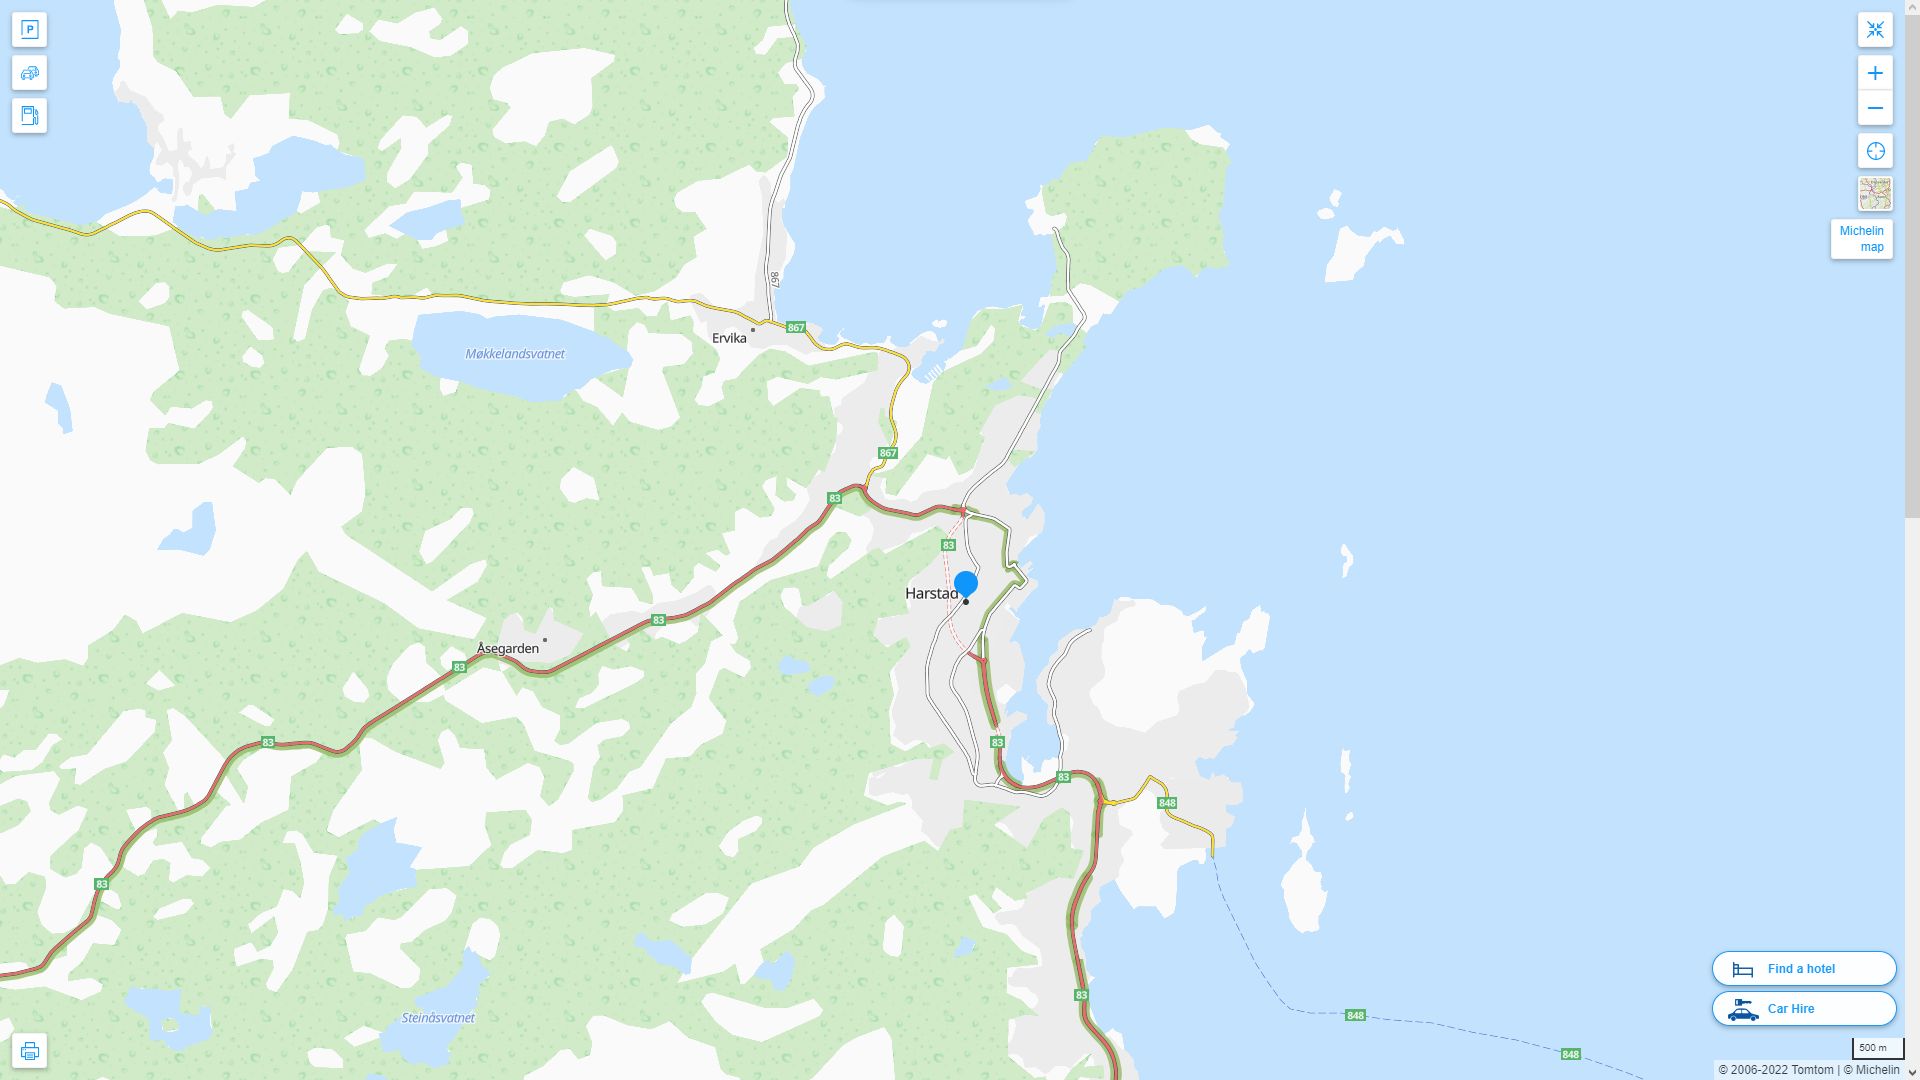 Harstad Norvege Autoroute et carte routiere